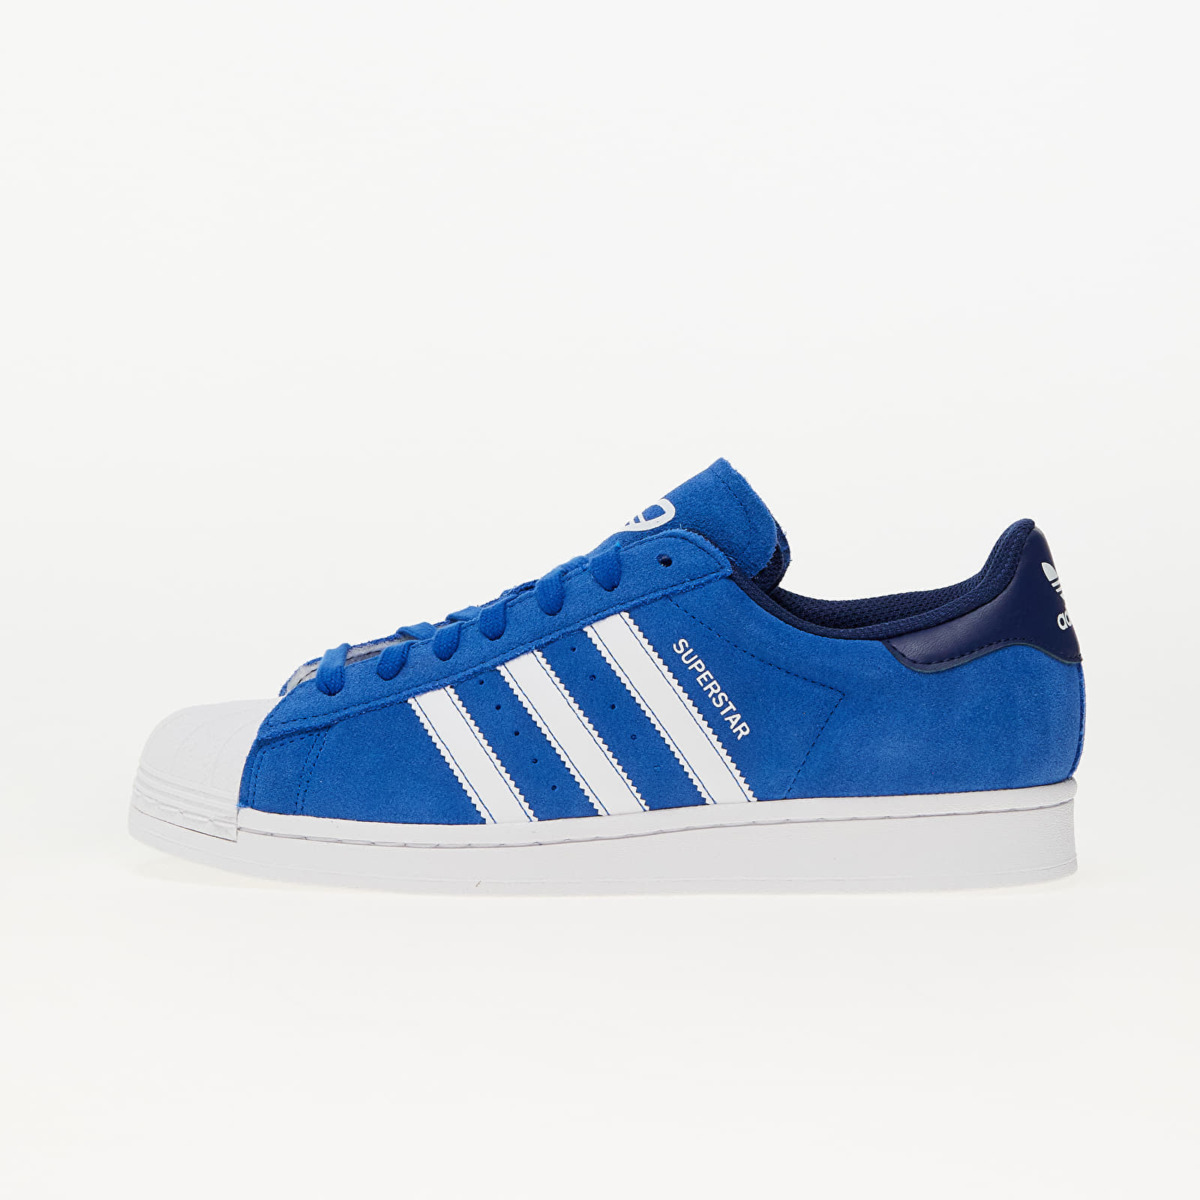 Superstars in Blue Footshop Adidas GOOFASH